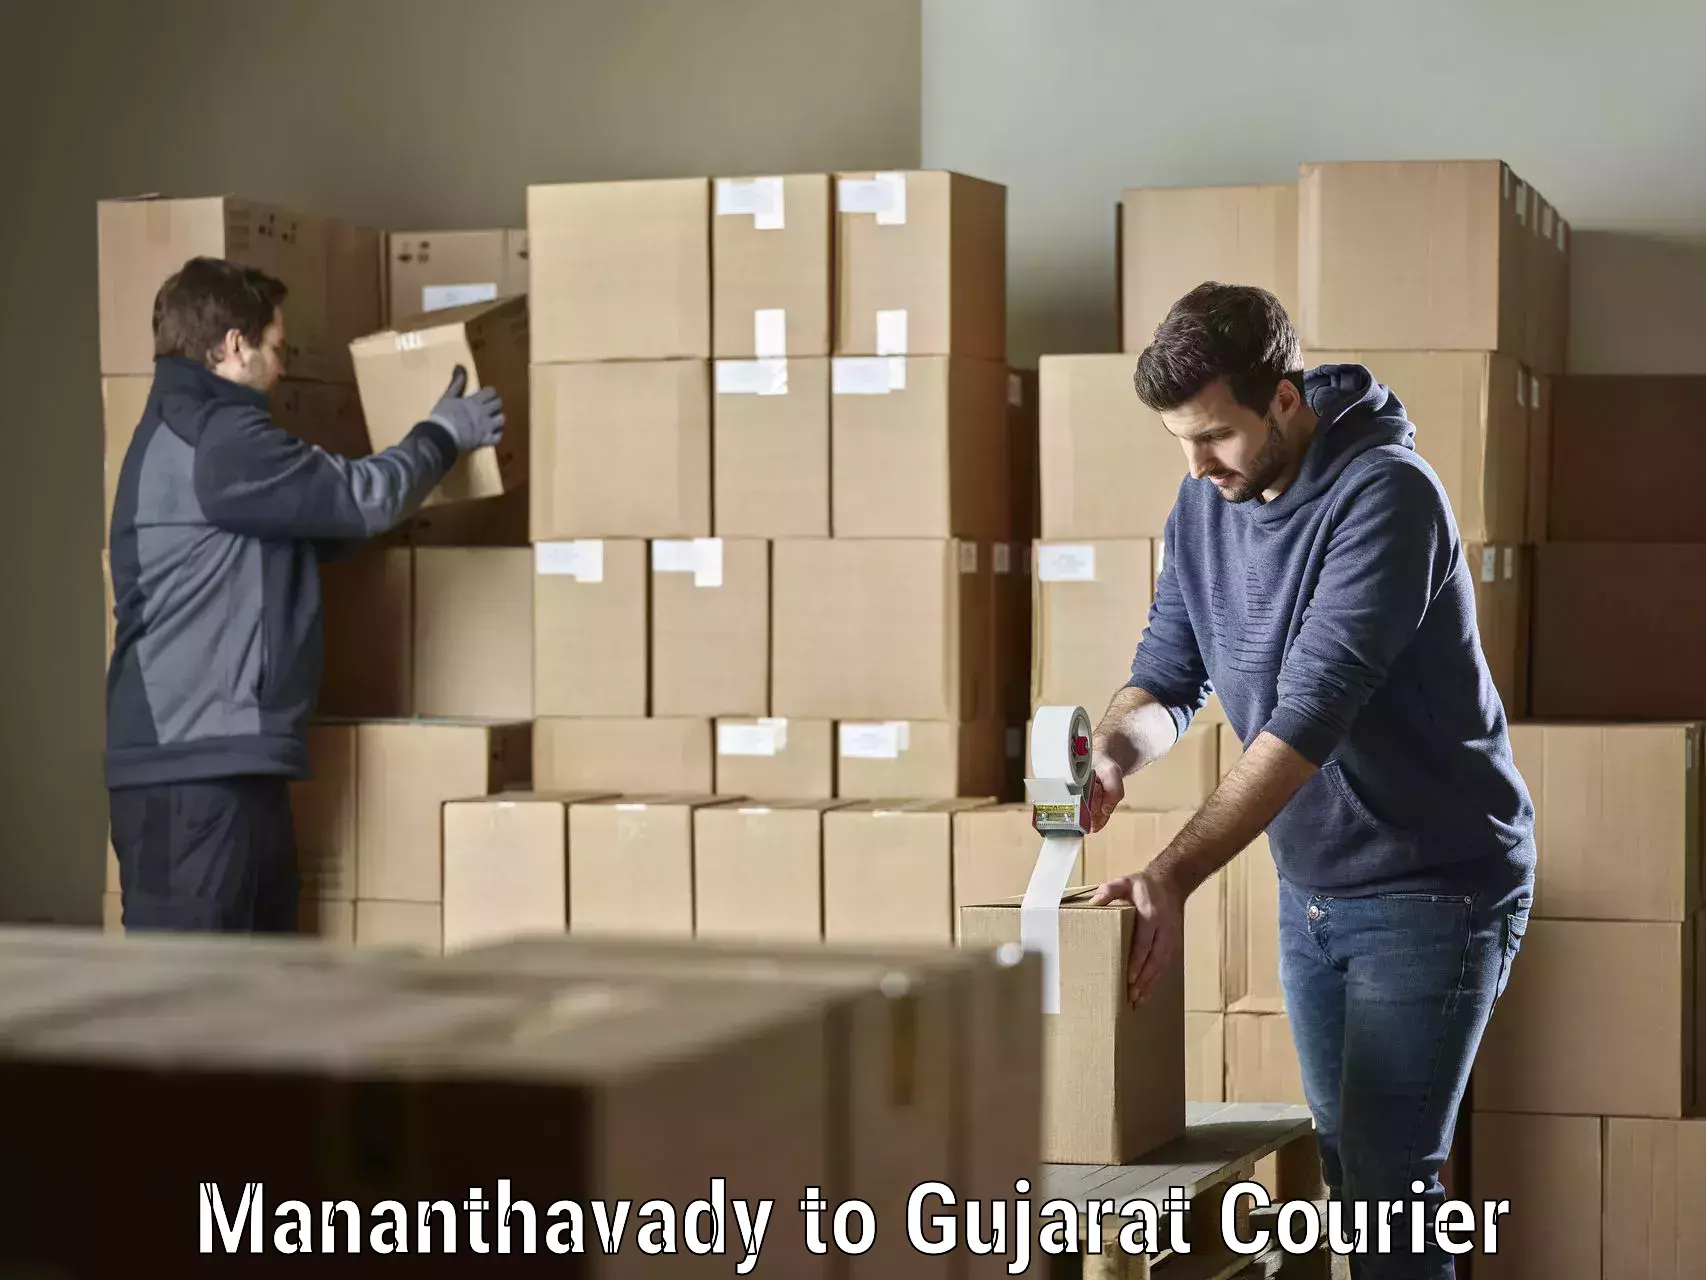 Courier service comparison Mananthavady to Rajkot